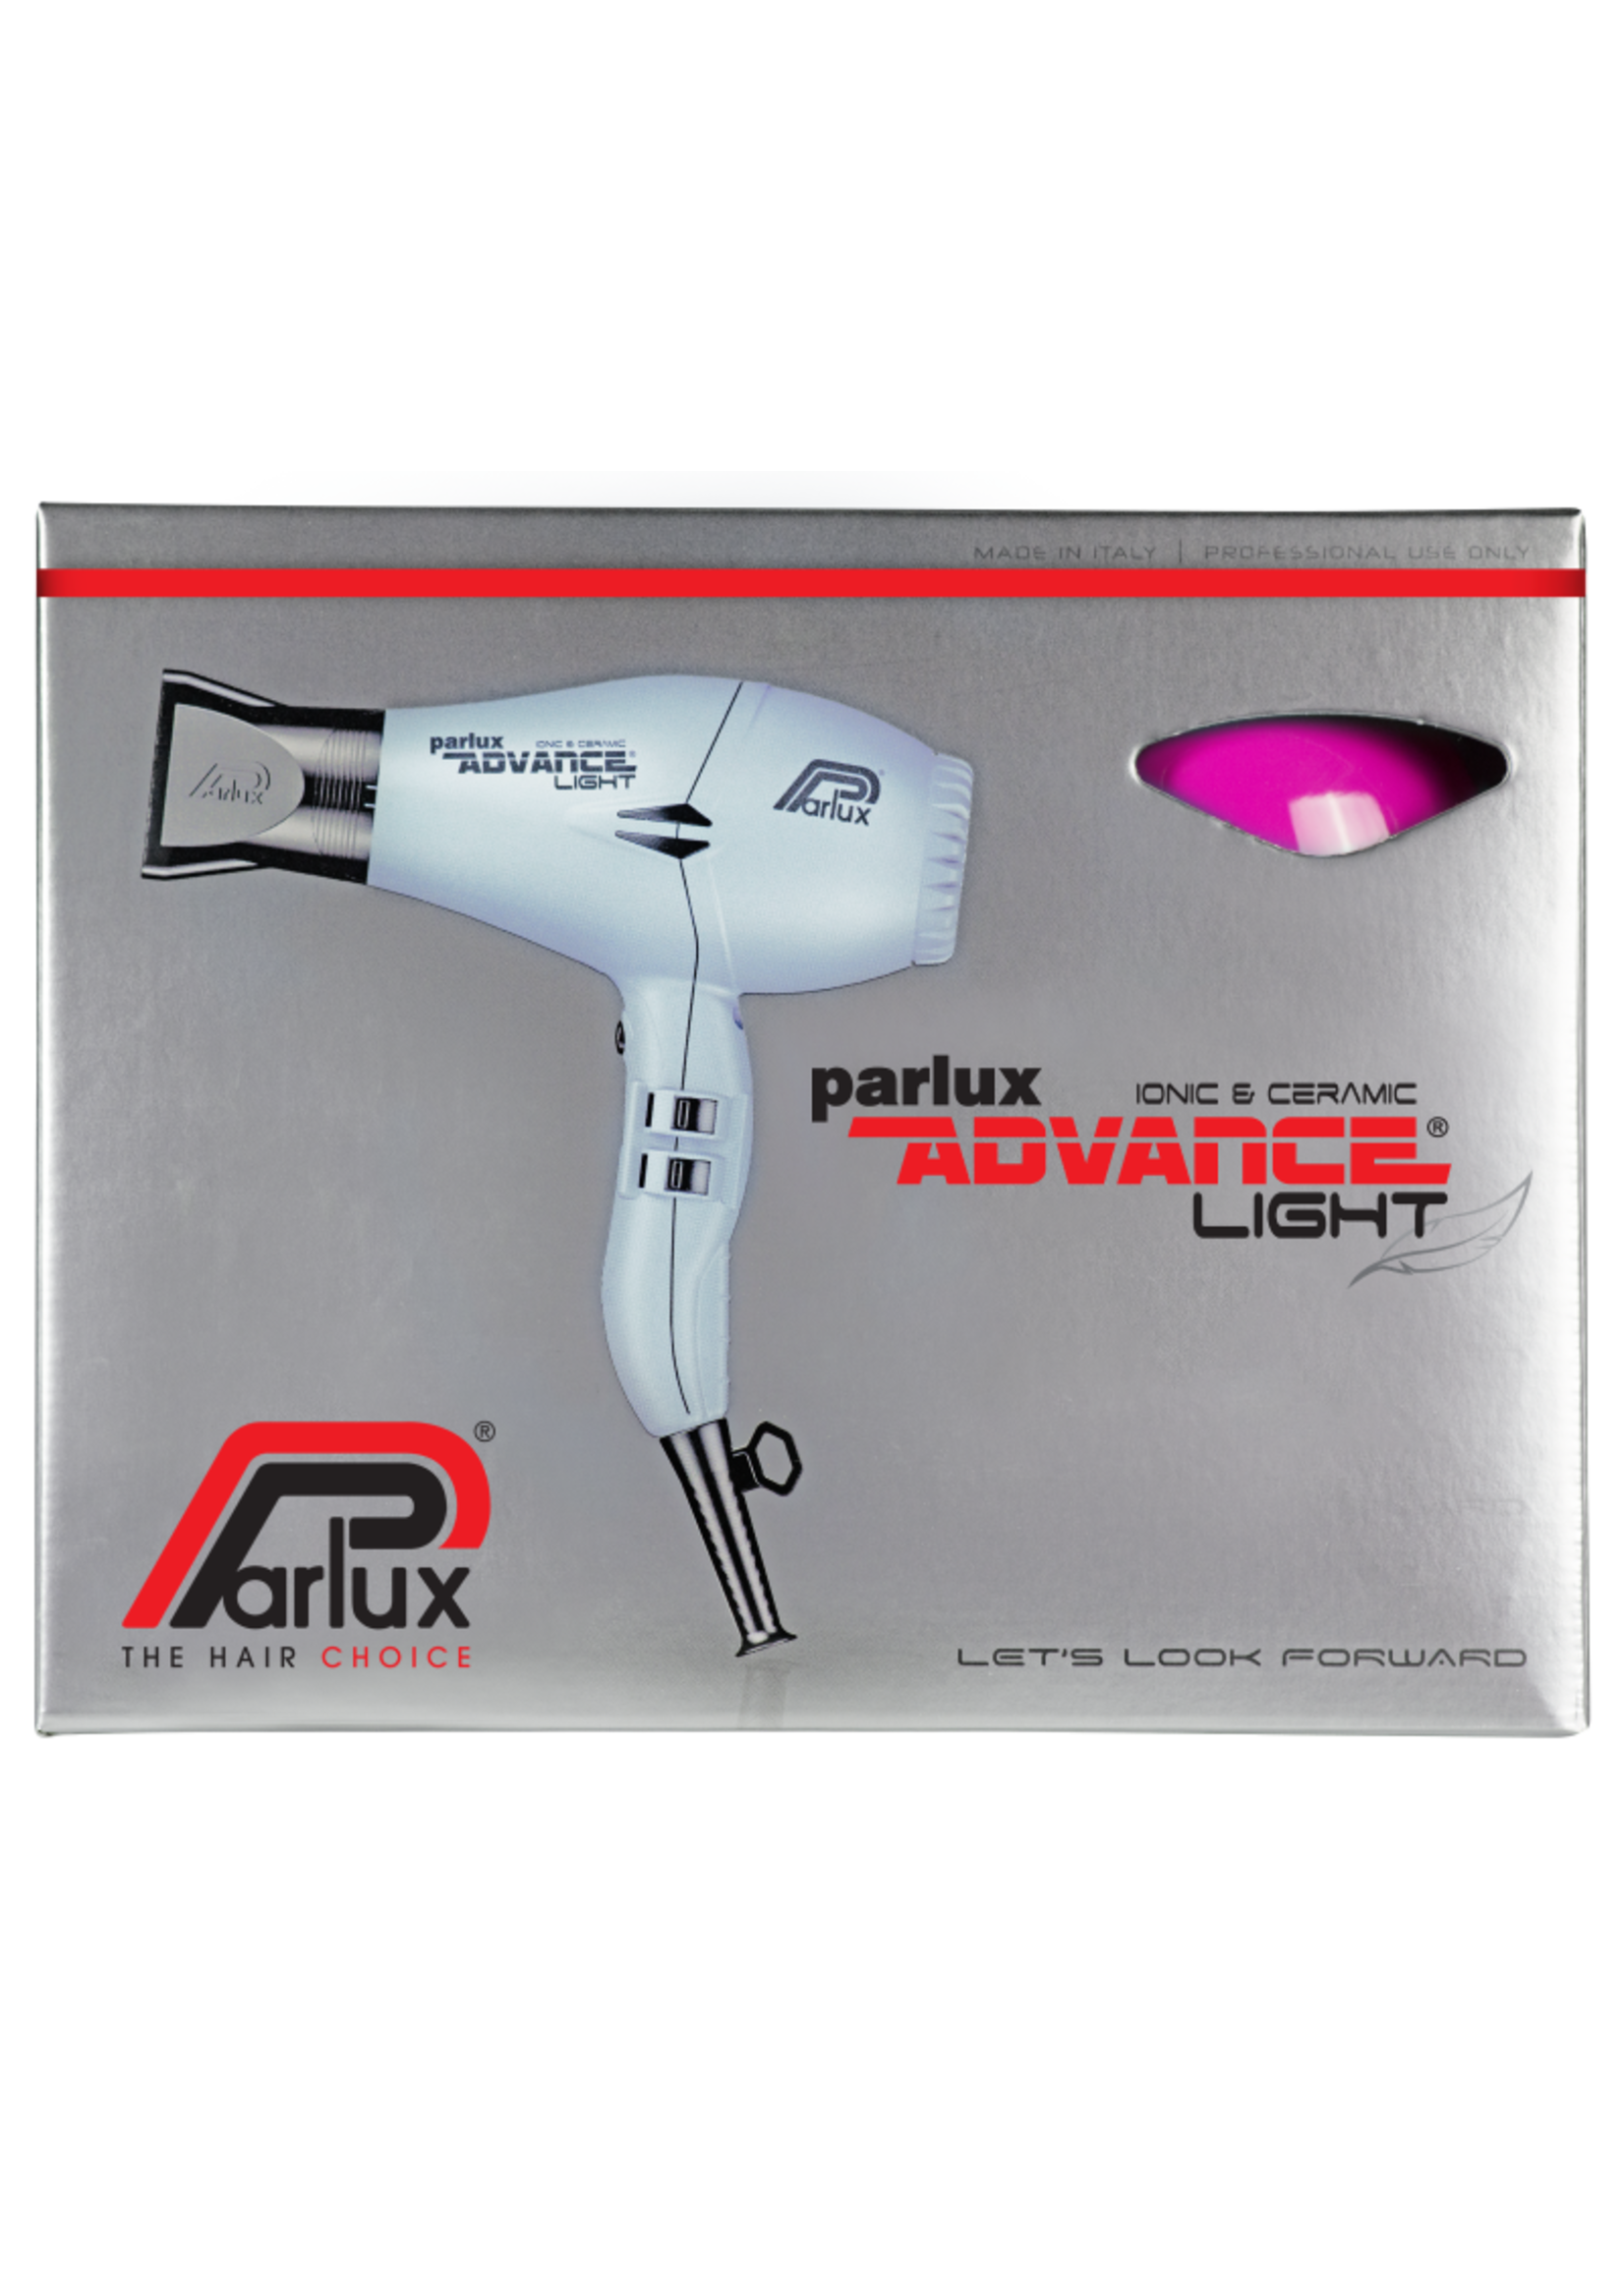 Parlux Parlux Advance Light Ceramic & Ionic Hair Dryer 2200W - Fuchsia